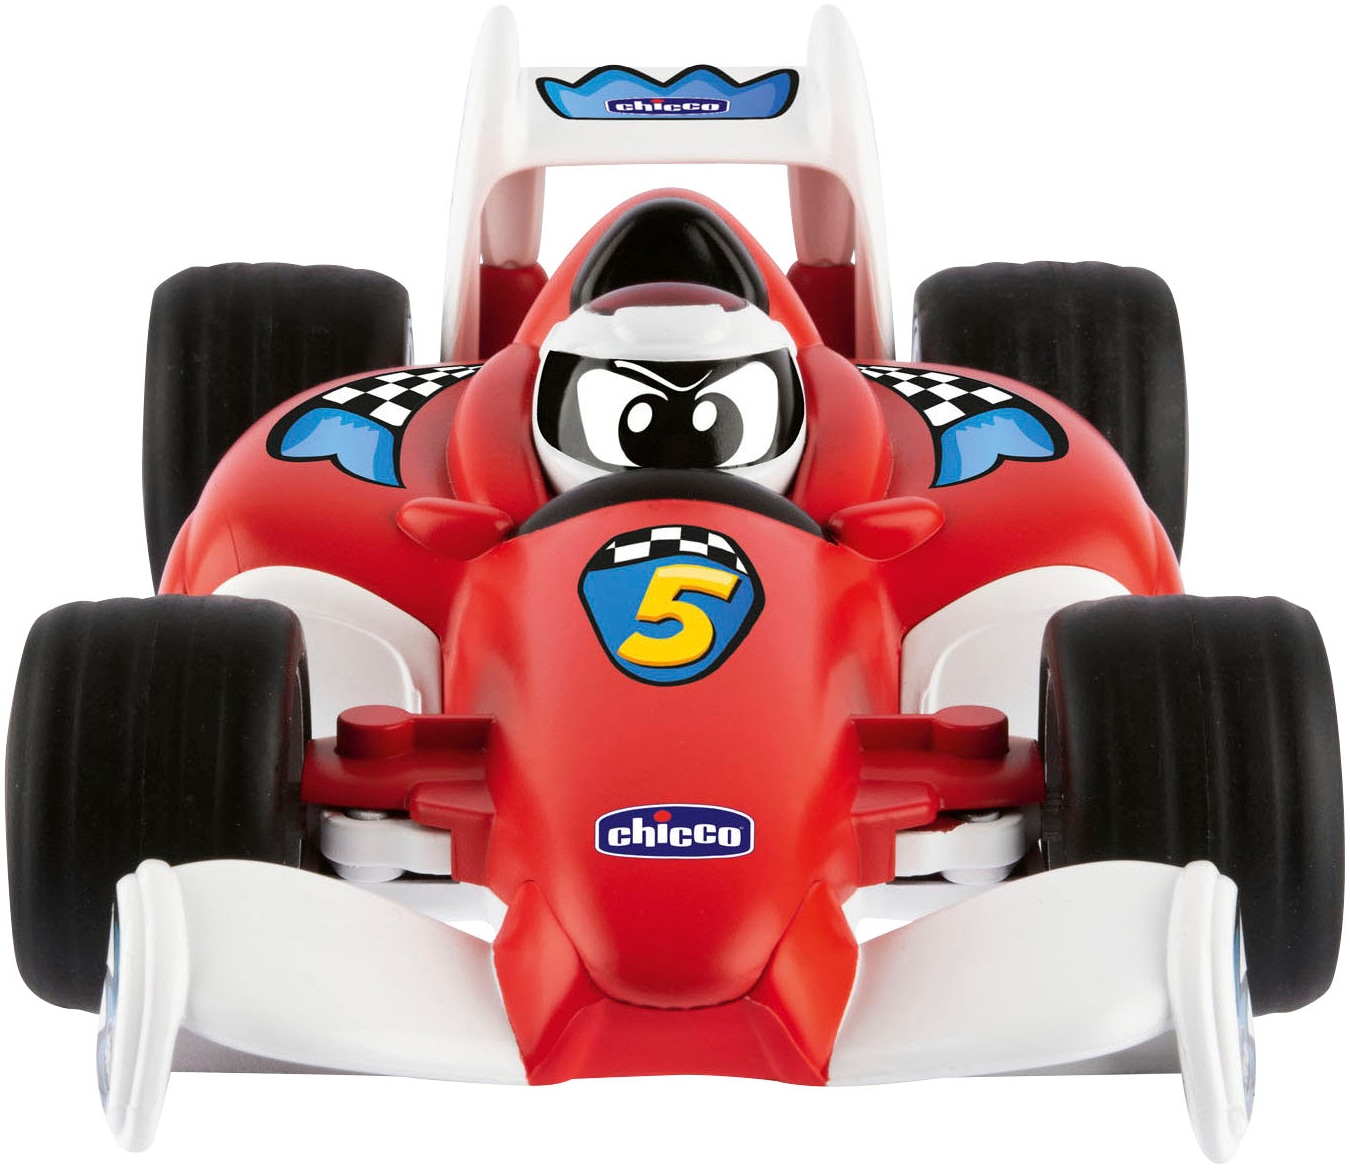 Chicco RC-Auto »Tom Race«